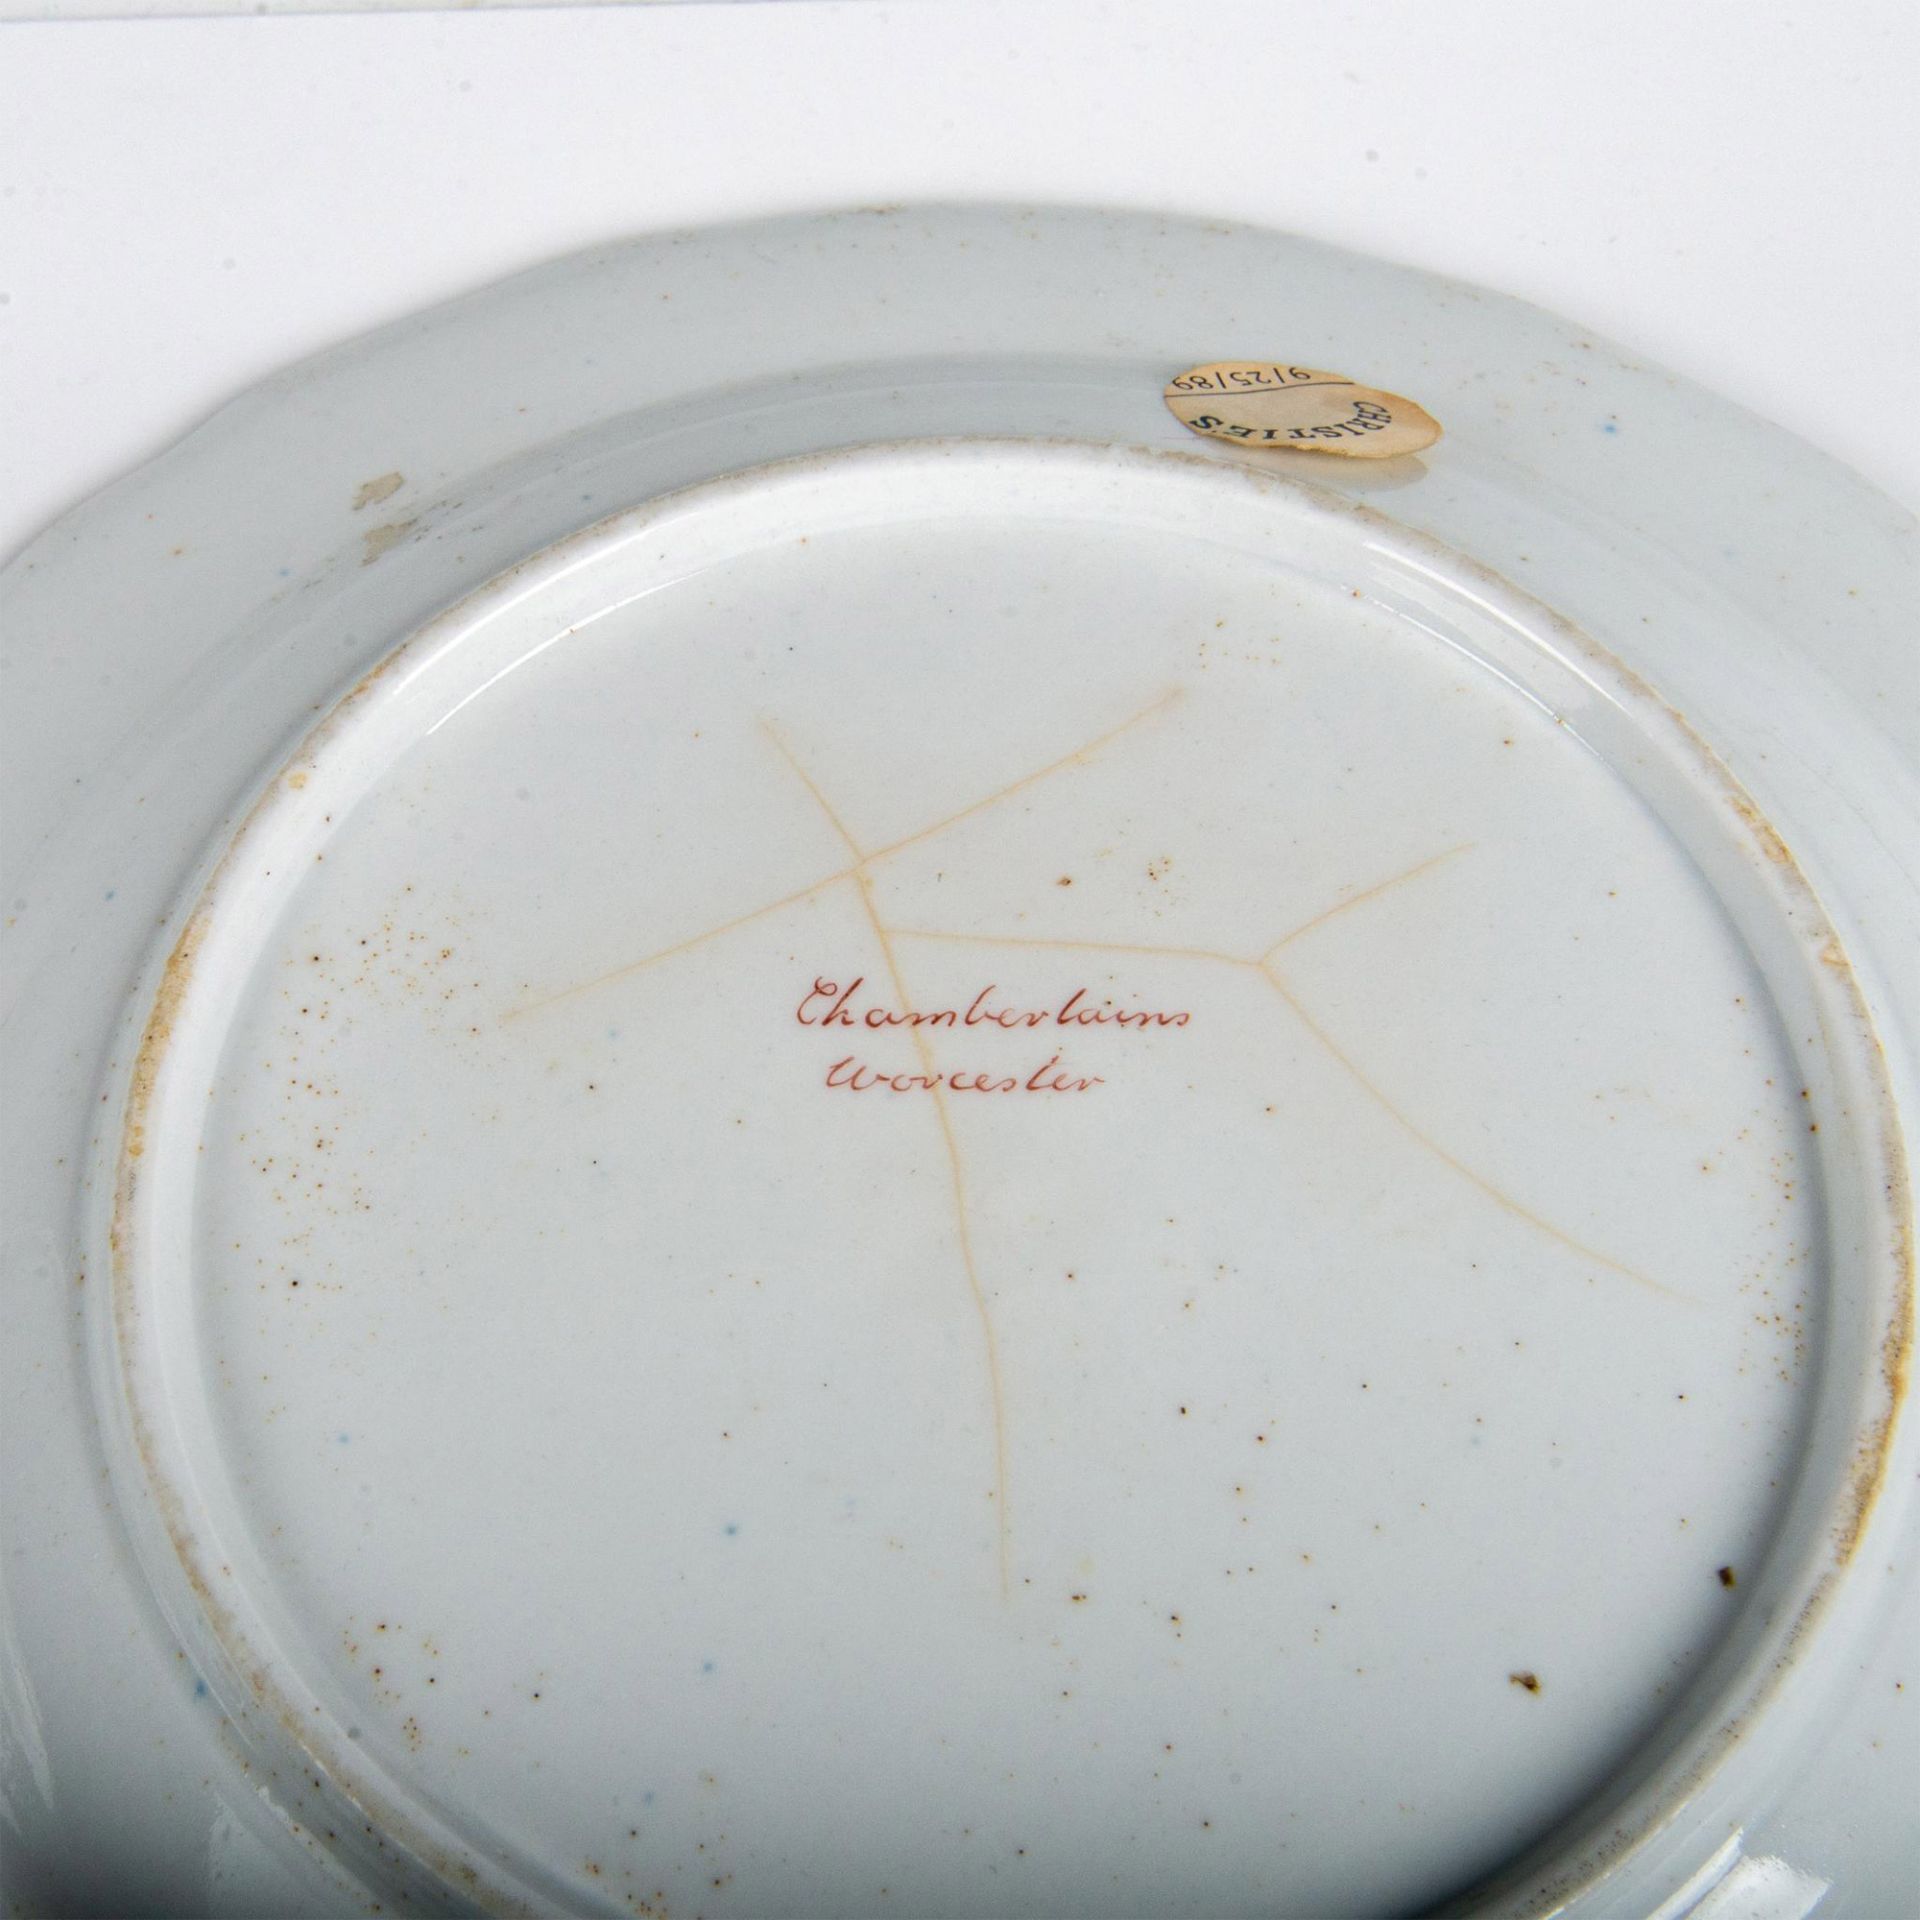 5pc Chamberlain's Worcester Porcelain Plates, Kakiemon - Image 6 of 6